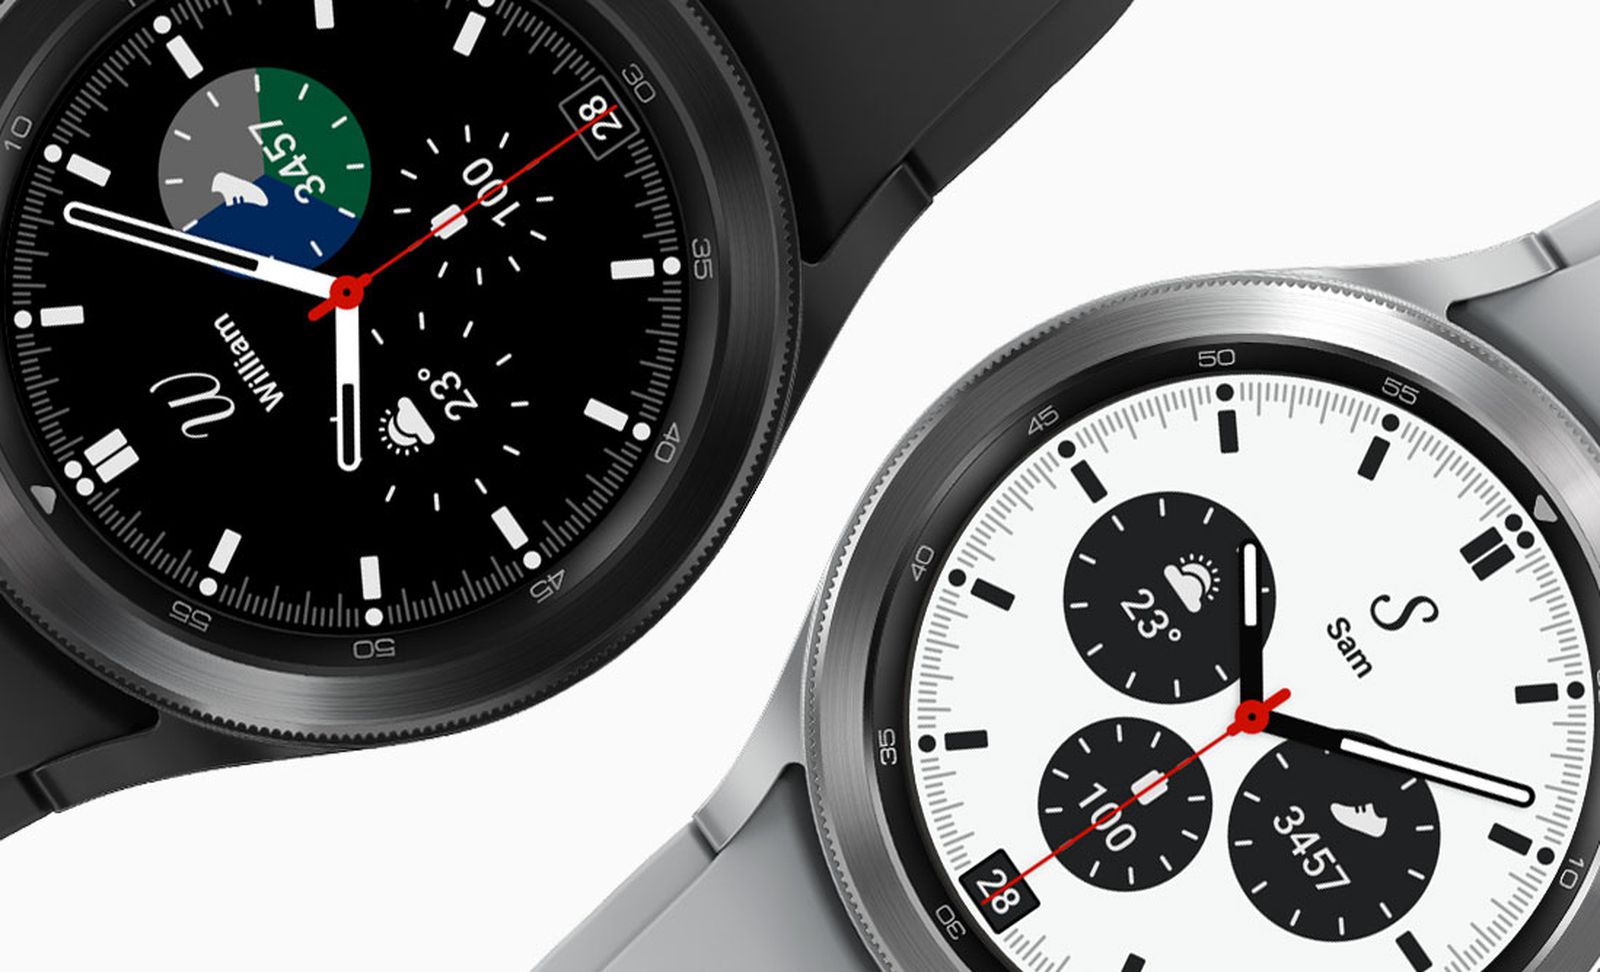 Samsung Galaxy Watch Gets Walkie-Talkie App Similar to Apple Watch Feature